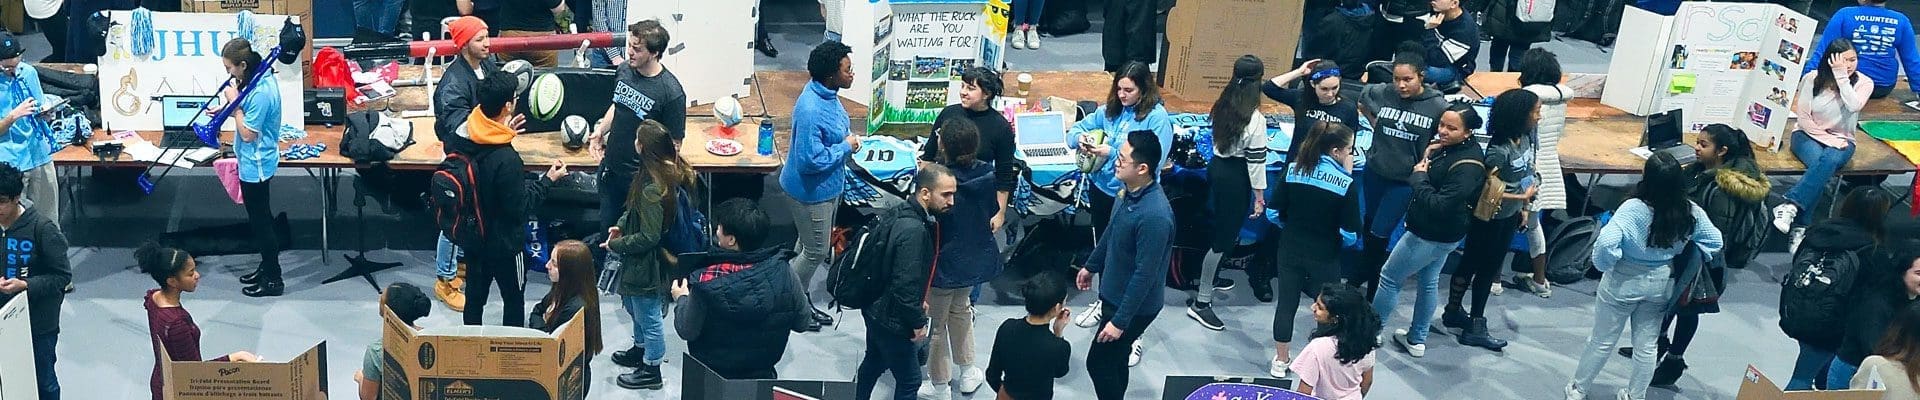 overhead view of 2019 student involvement fair